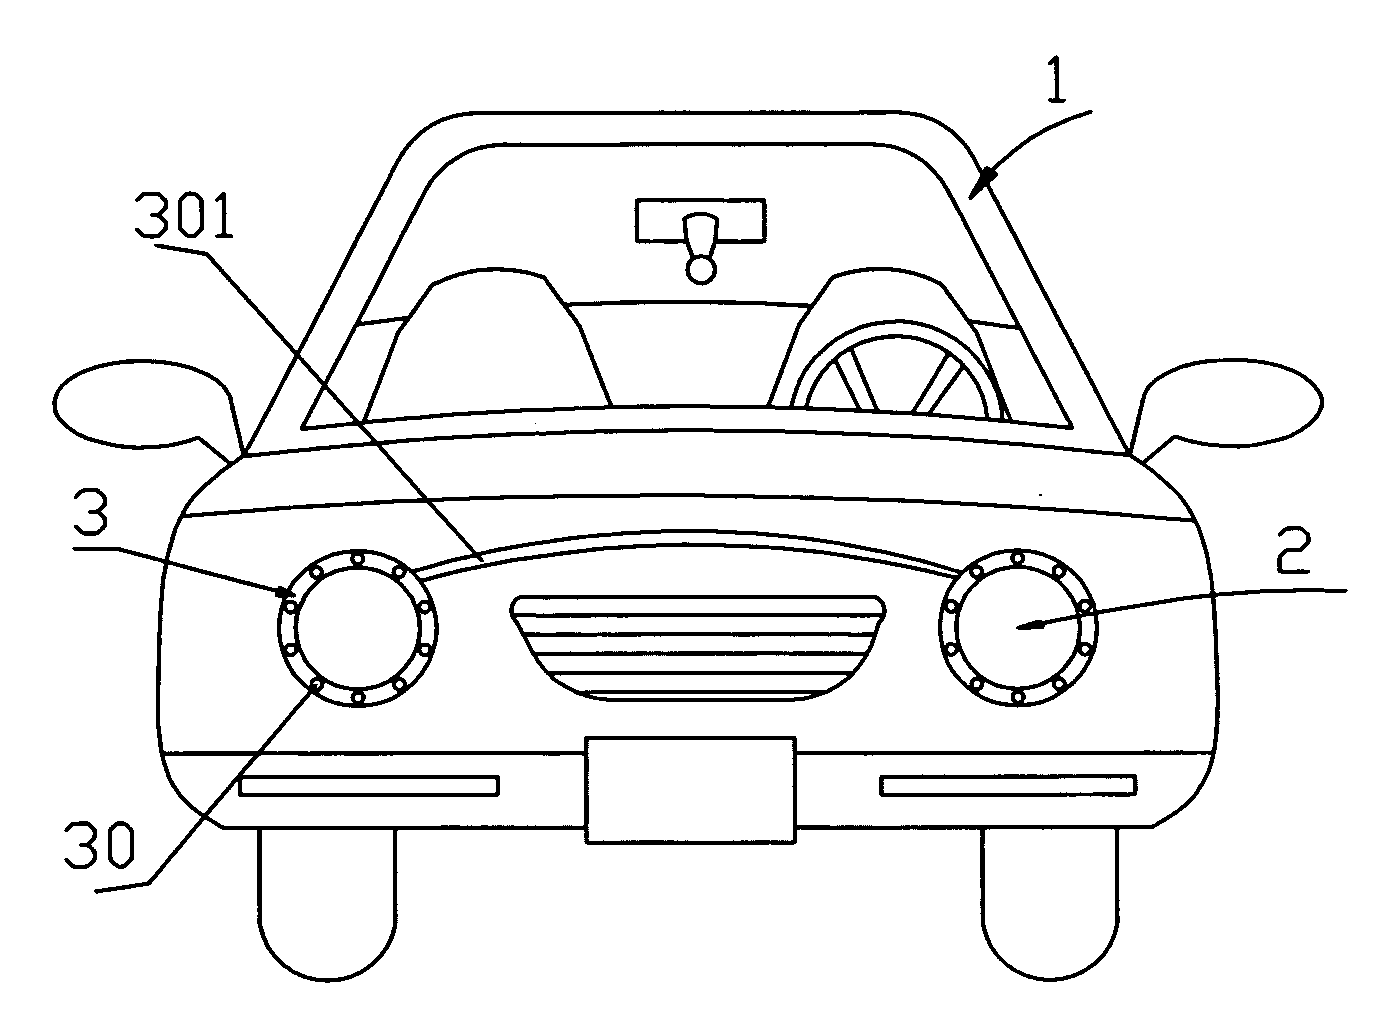 Vehicle having an auxiliary illuminating function